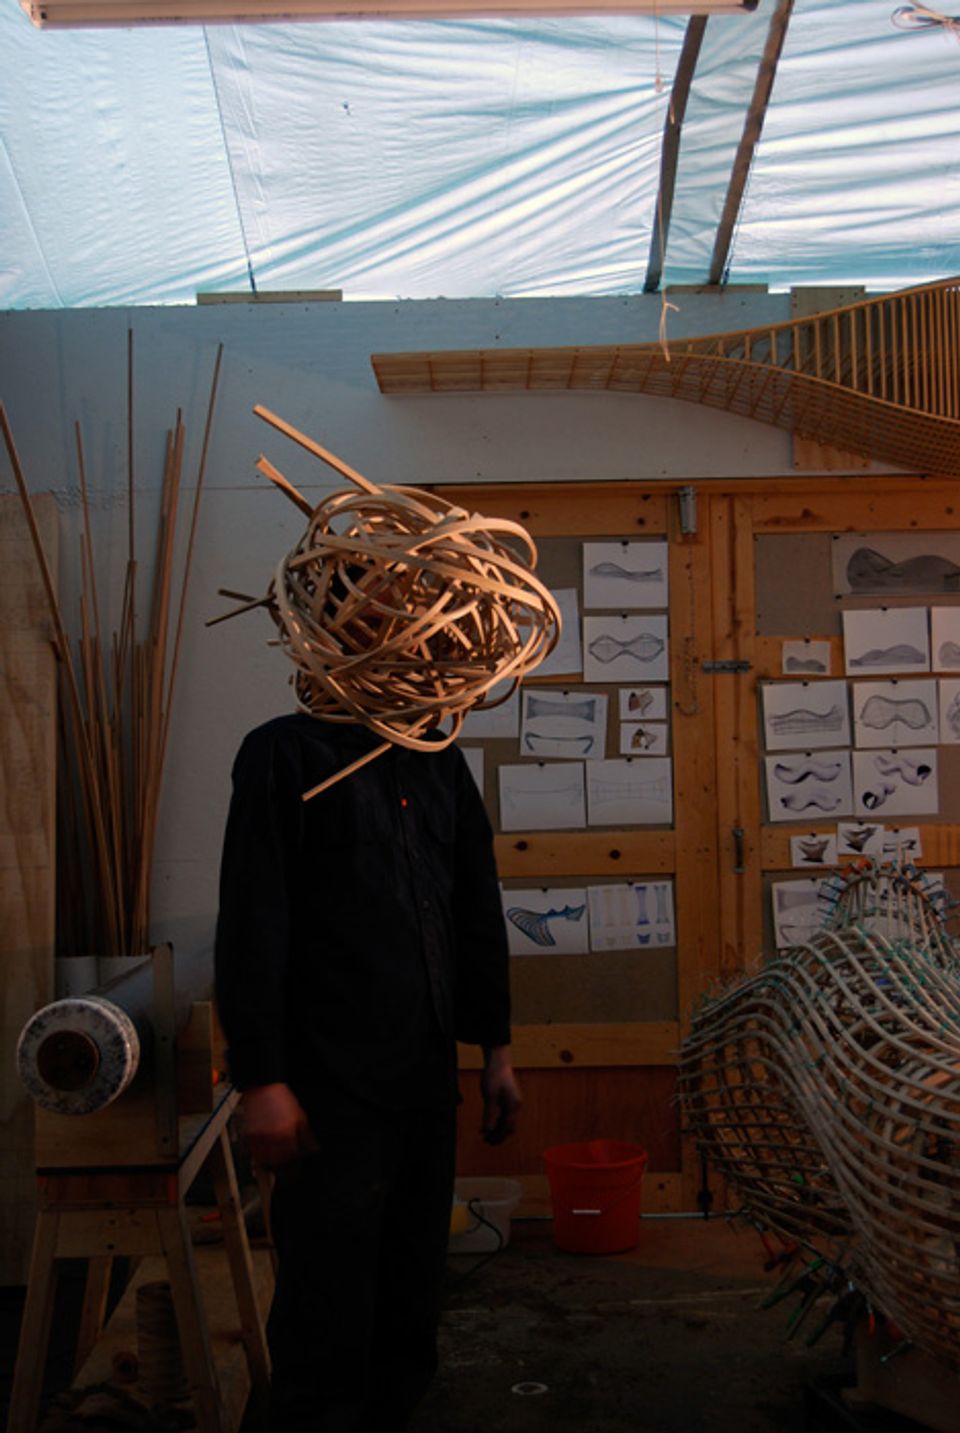 An image of Matthias Pliessnig in his studio.